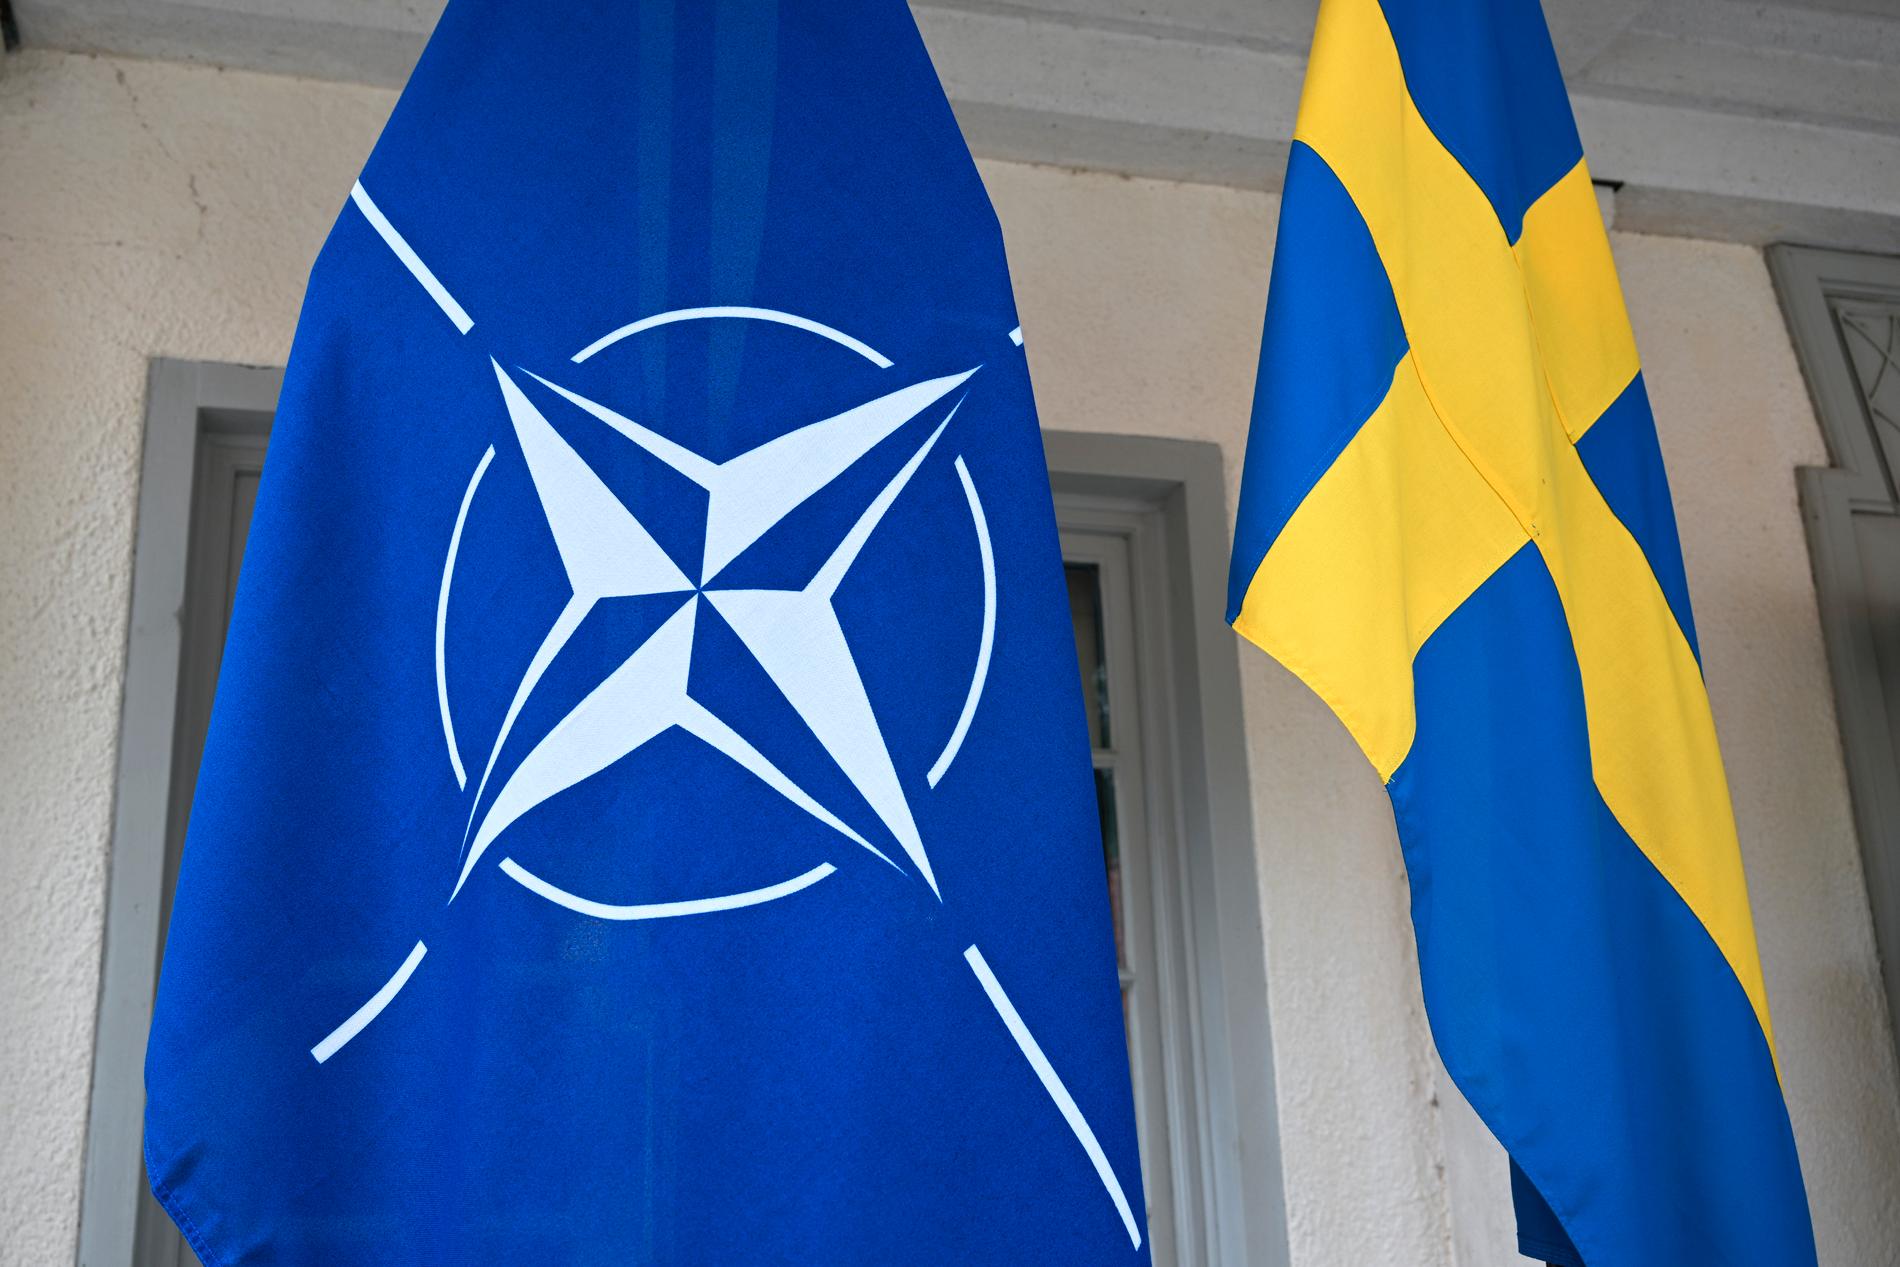  Natos flagga och Sveriges Flagga.